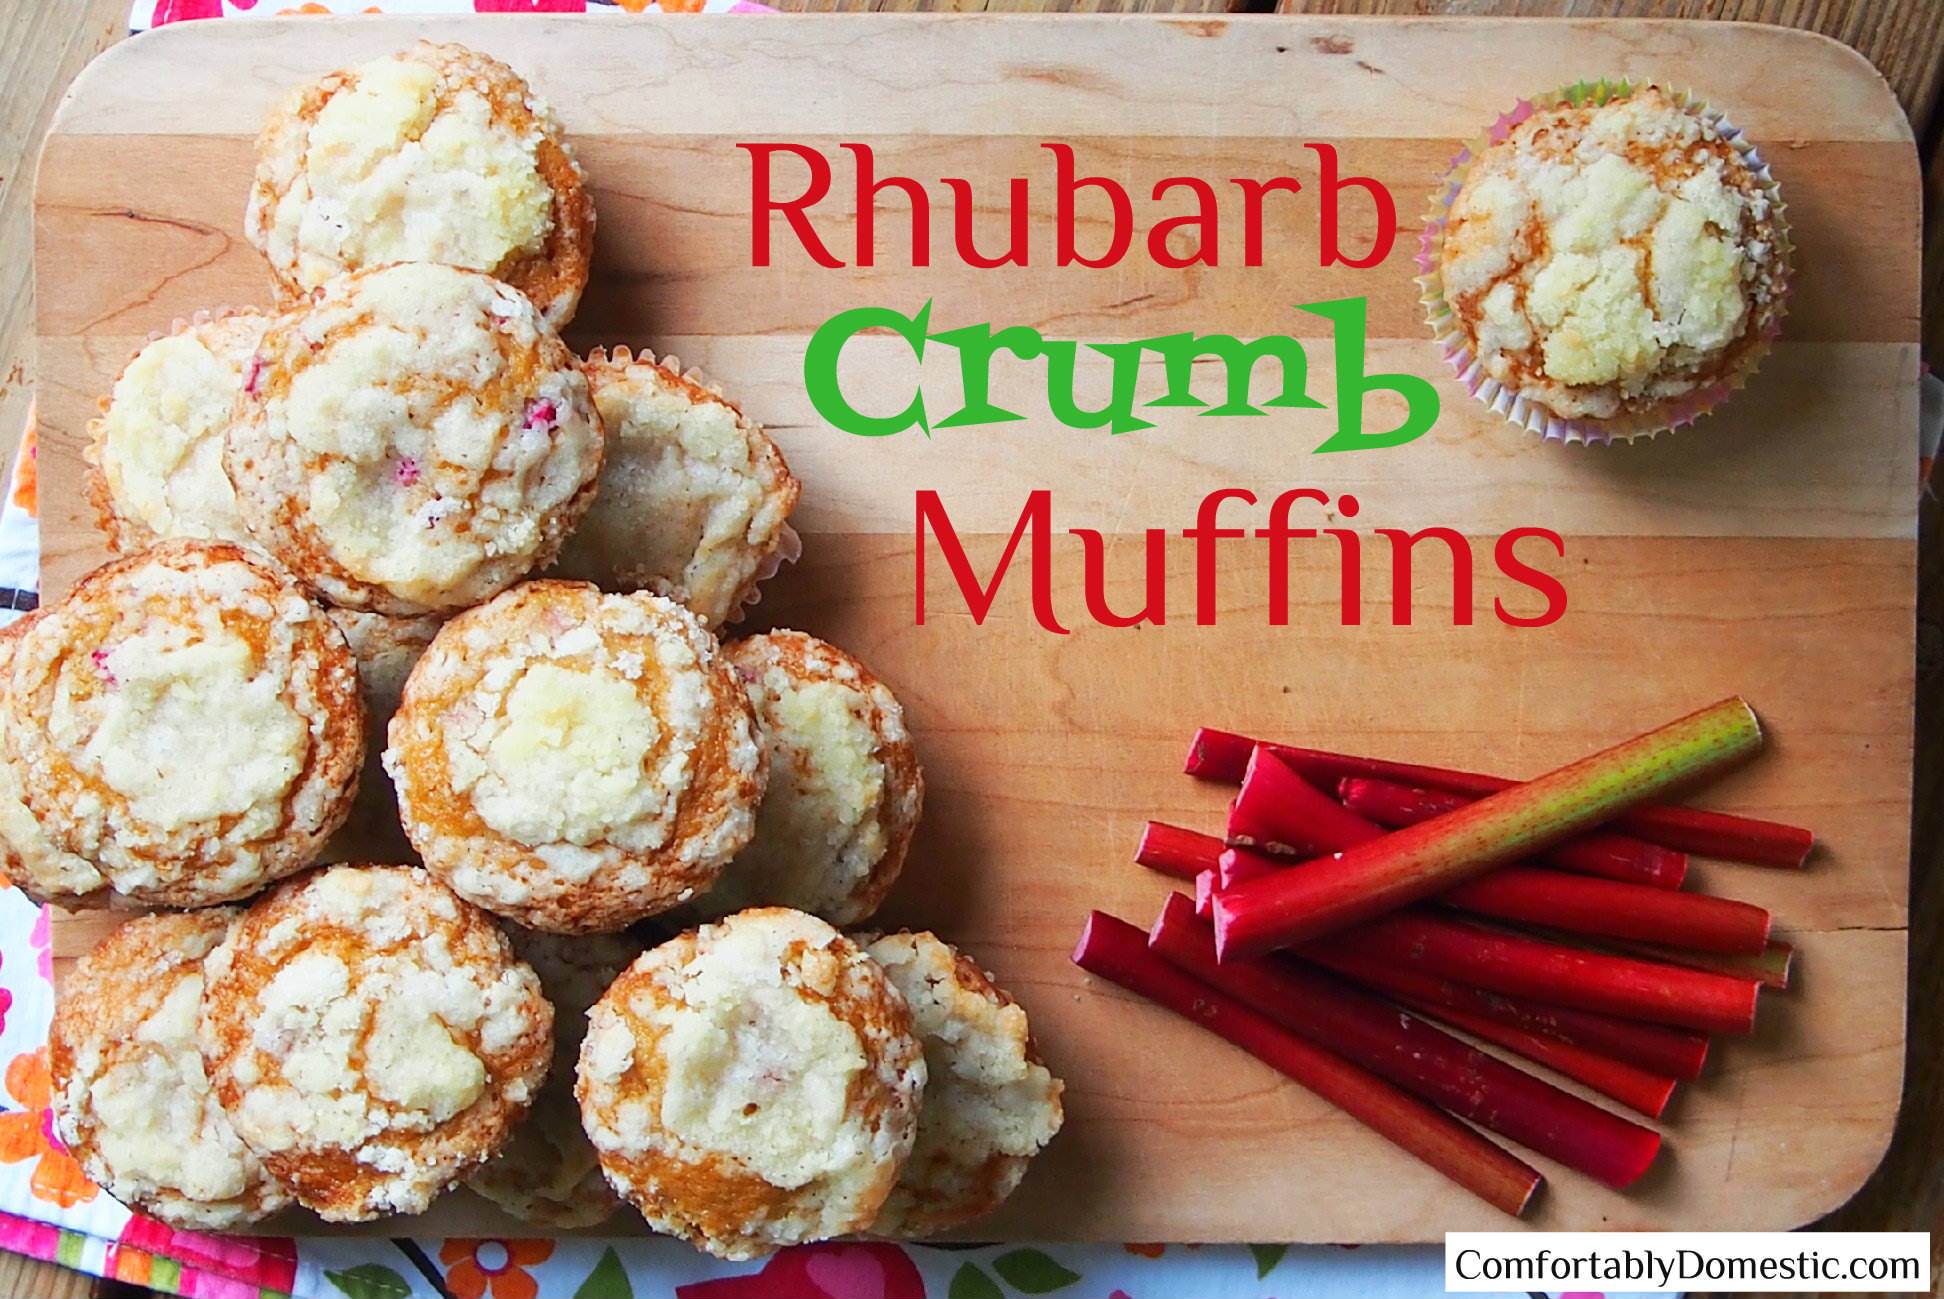 Rhubarb Crumb Muffins | ComfortablyDomestic.com